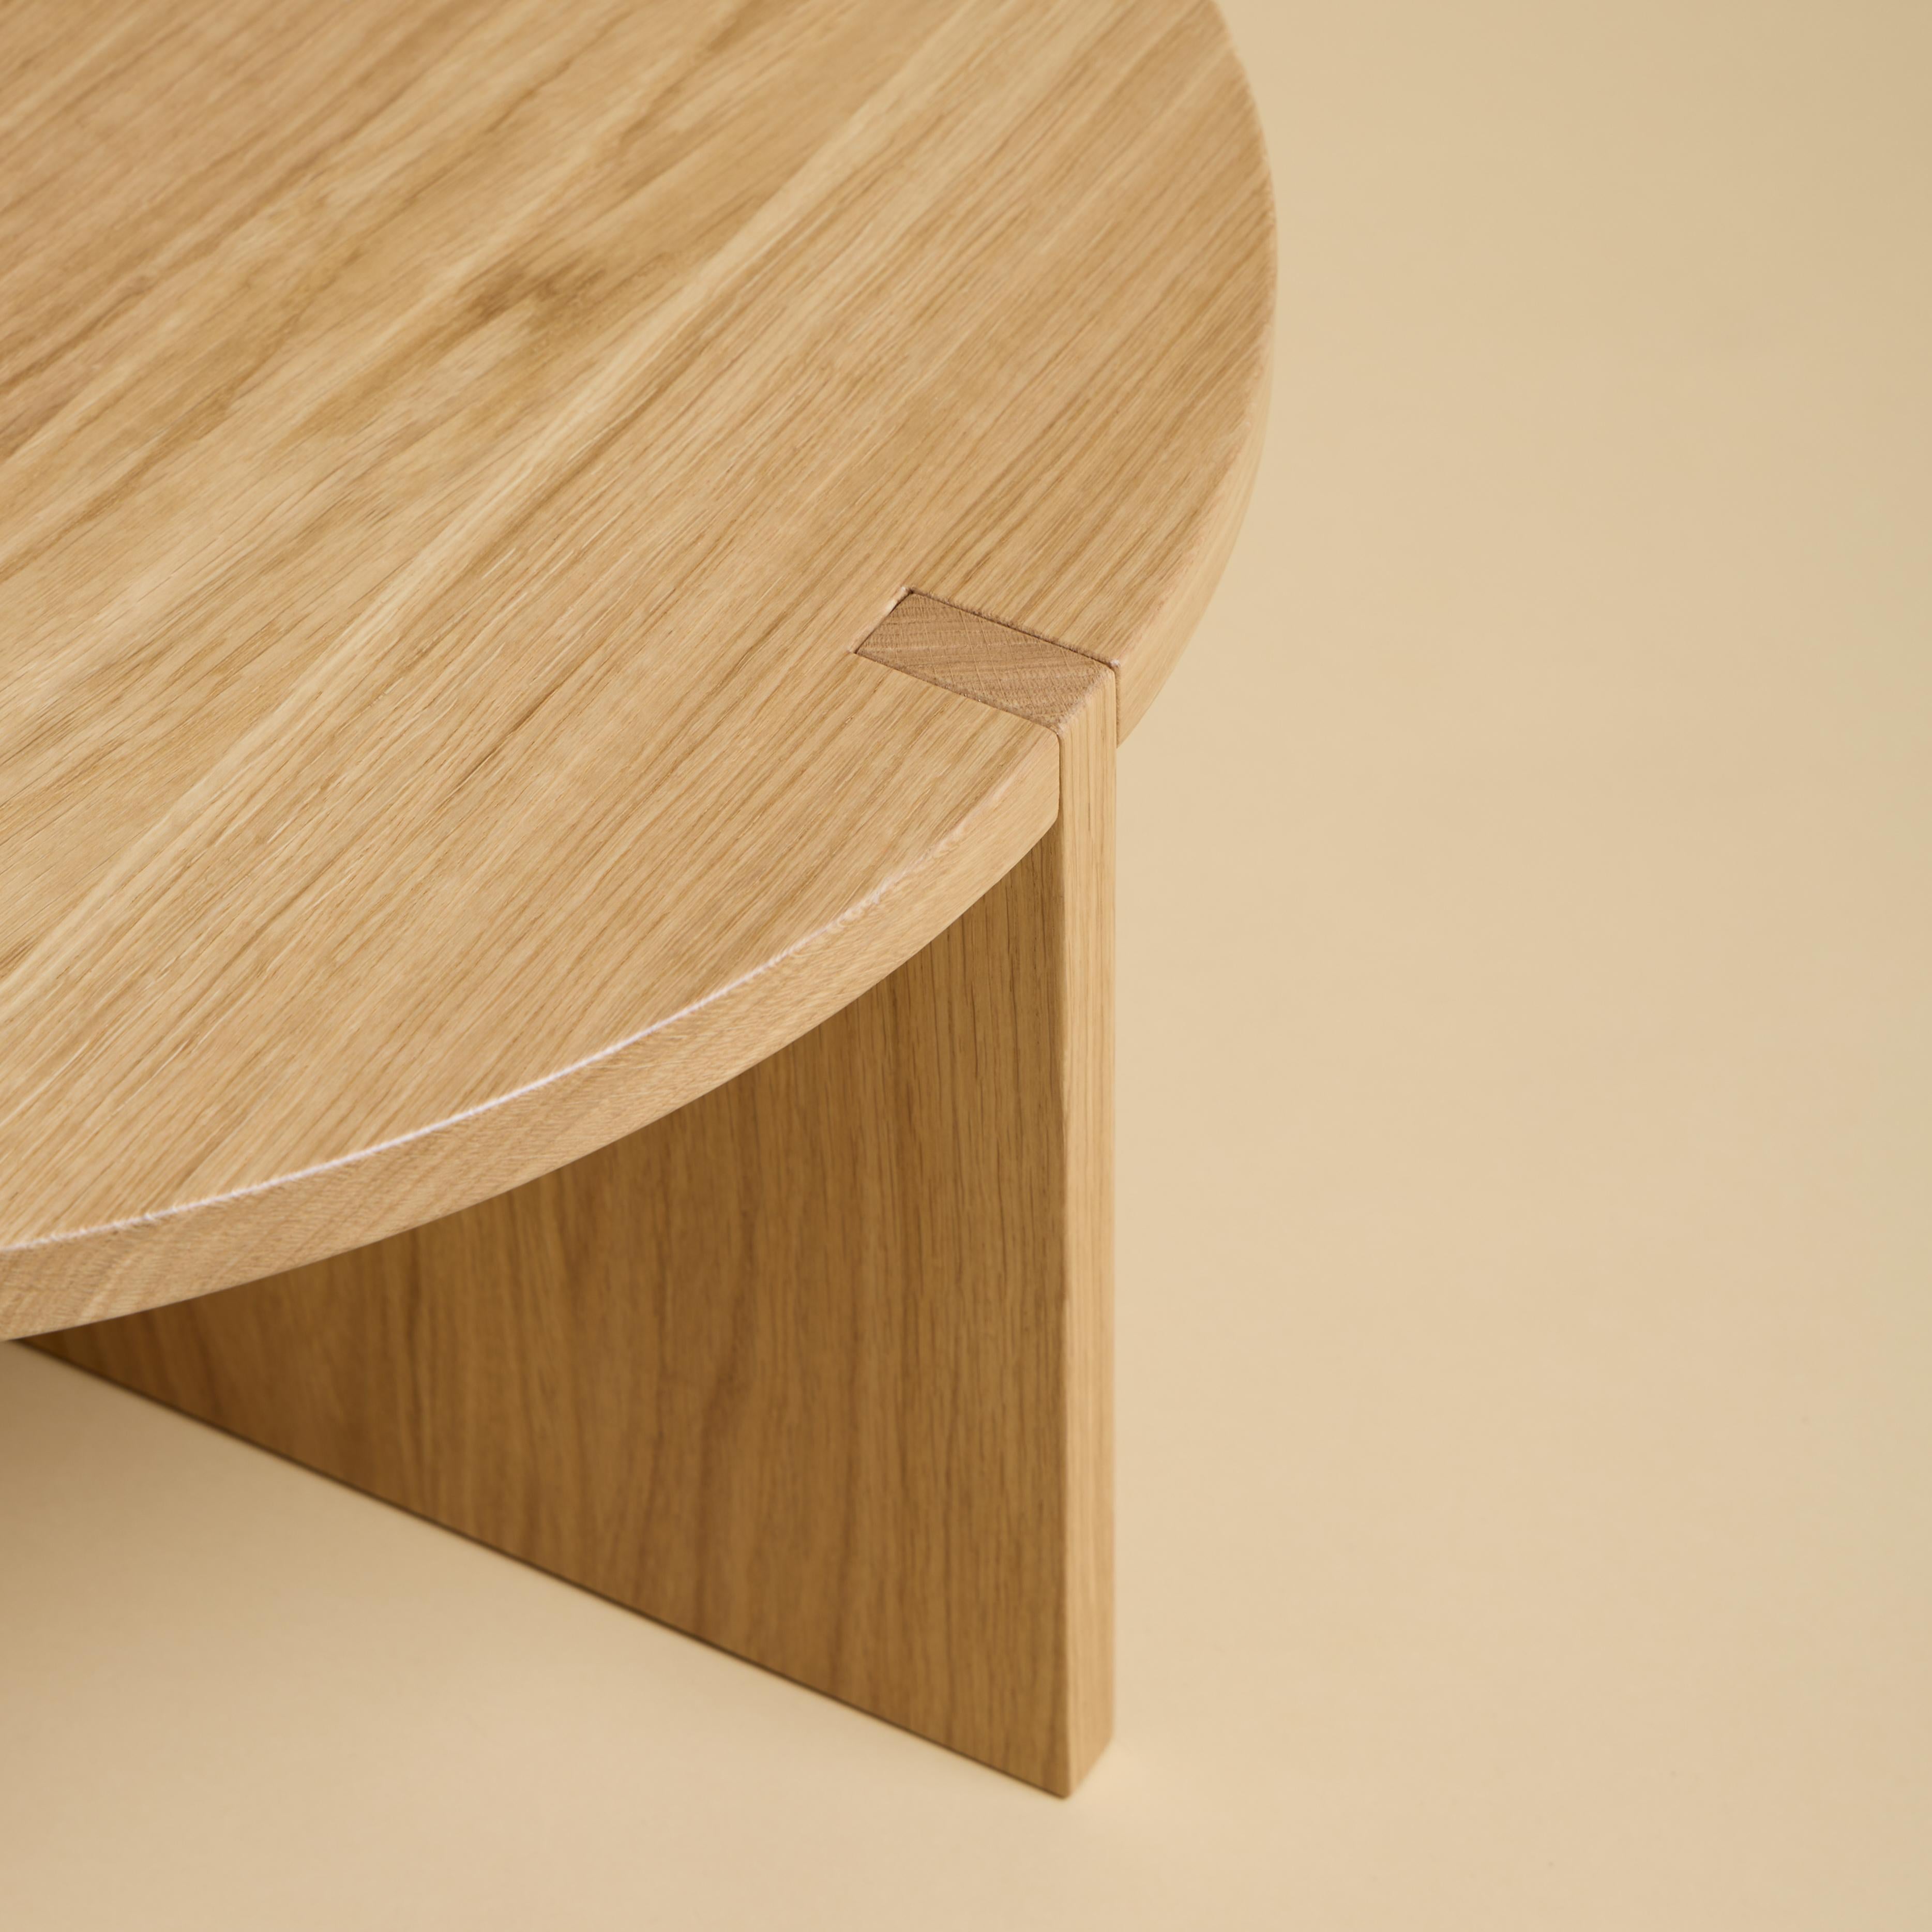 Moderne Table basse en bois de chêne massif, fabriquée en Italie en vente